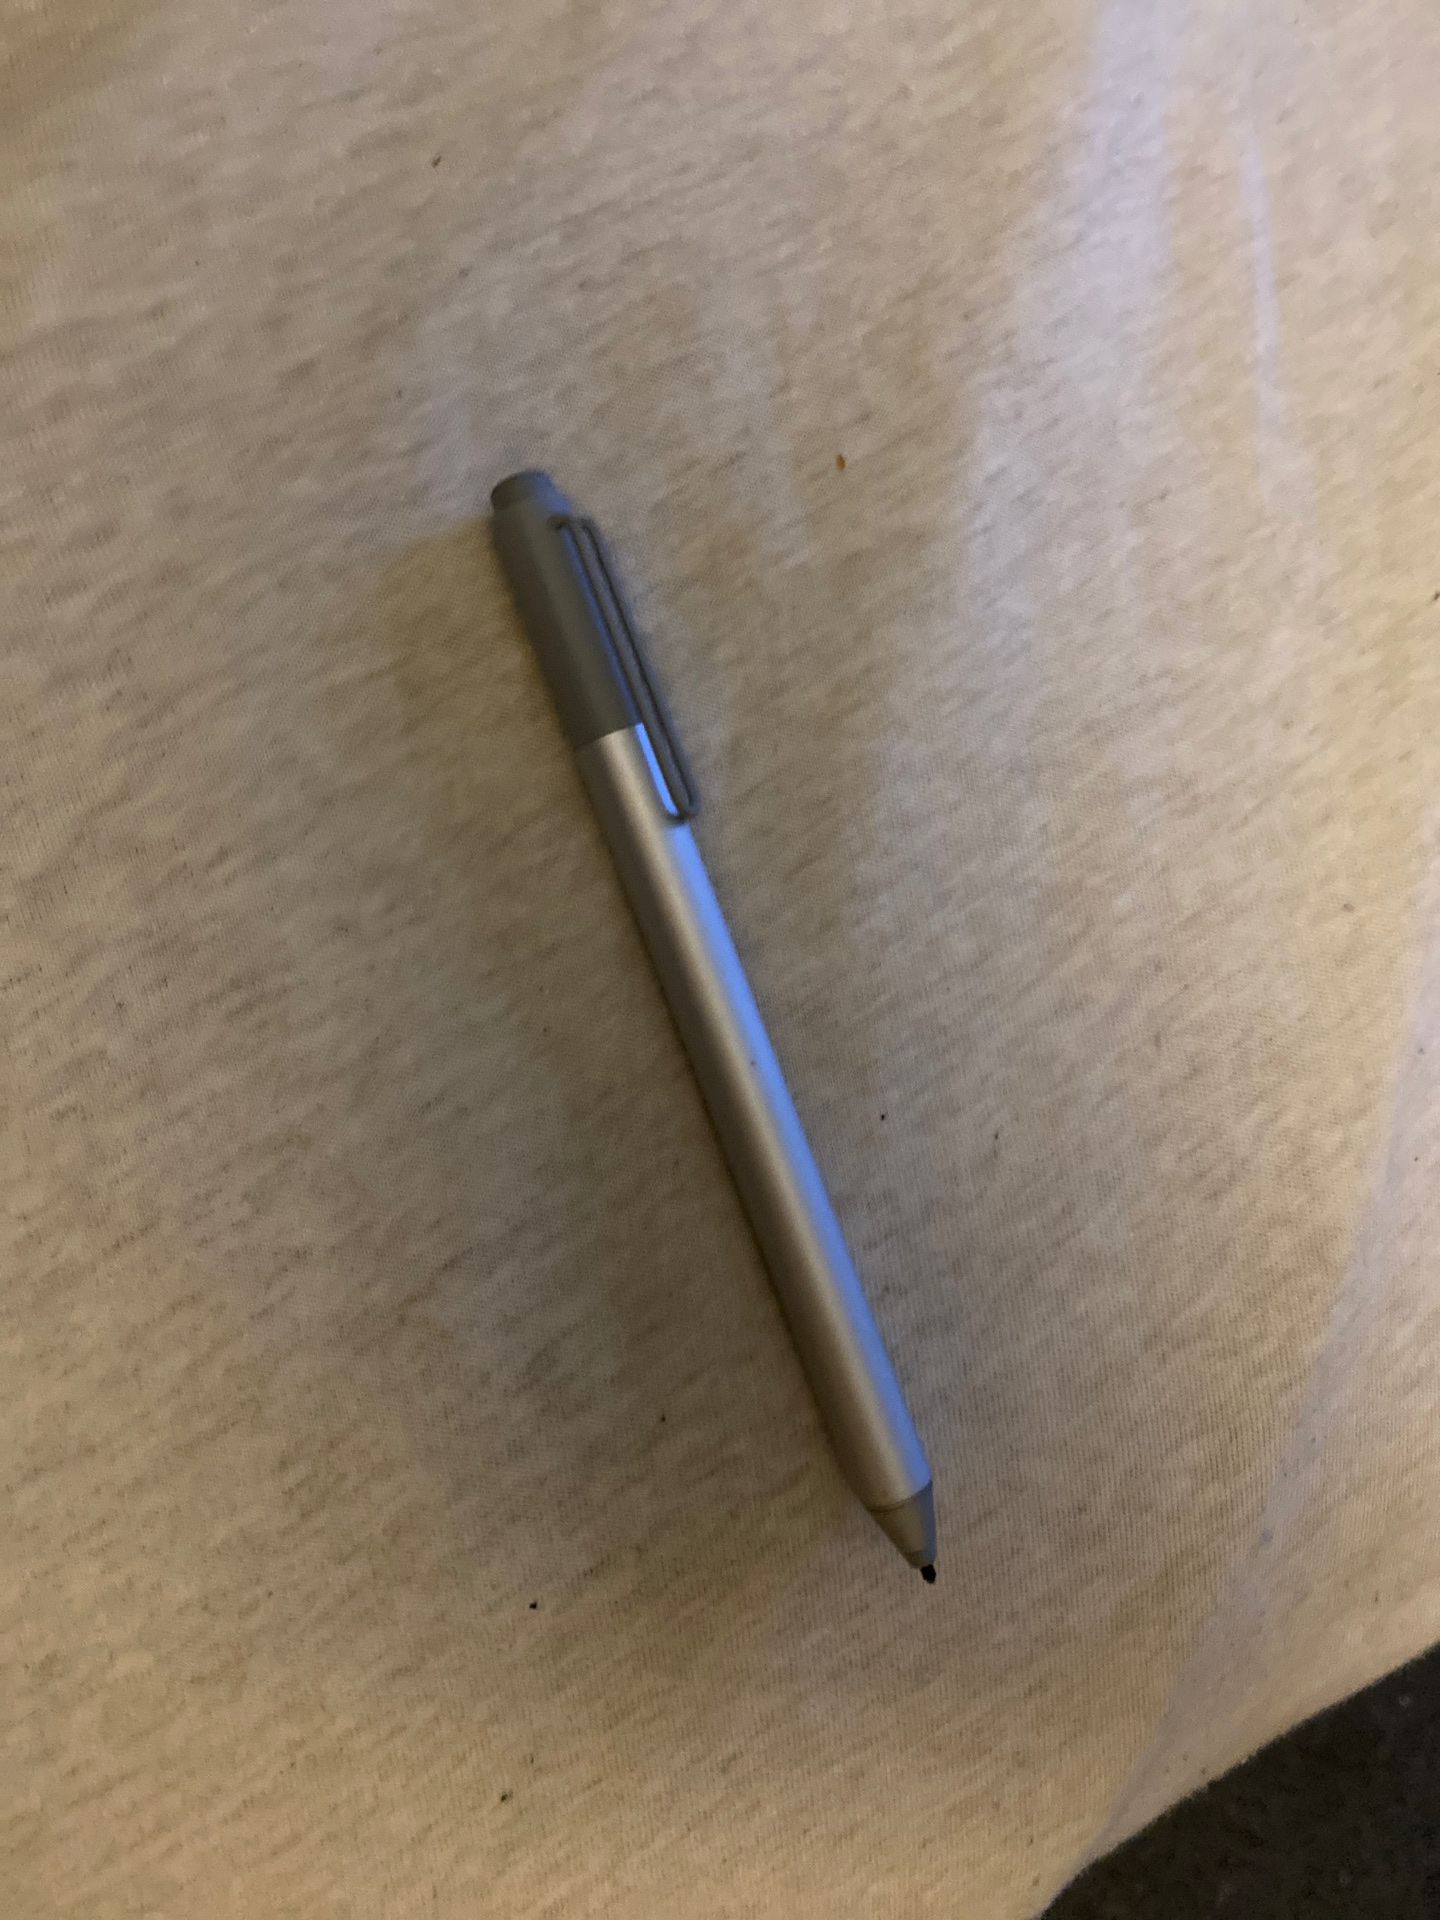 Microsoft surface pro pen